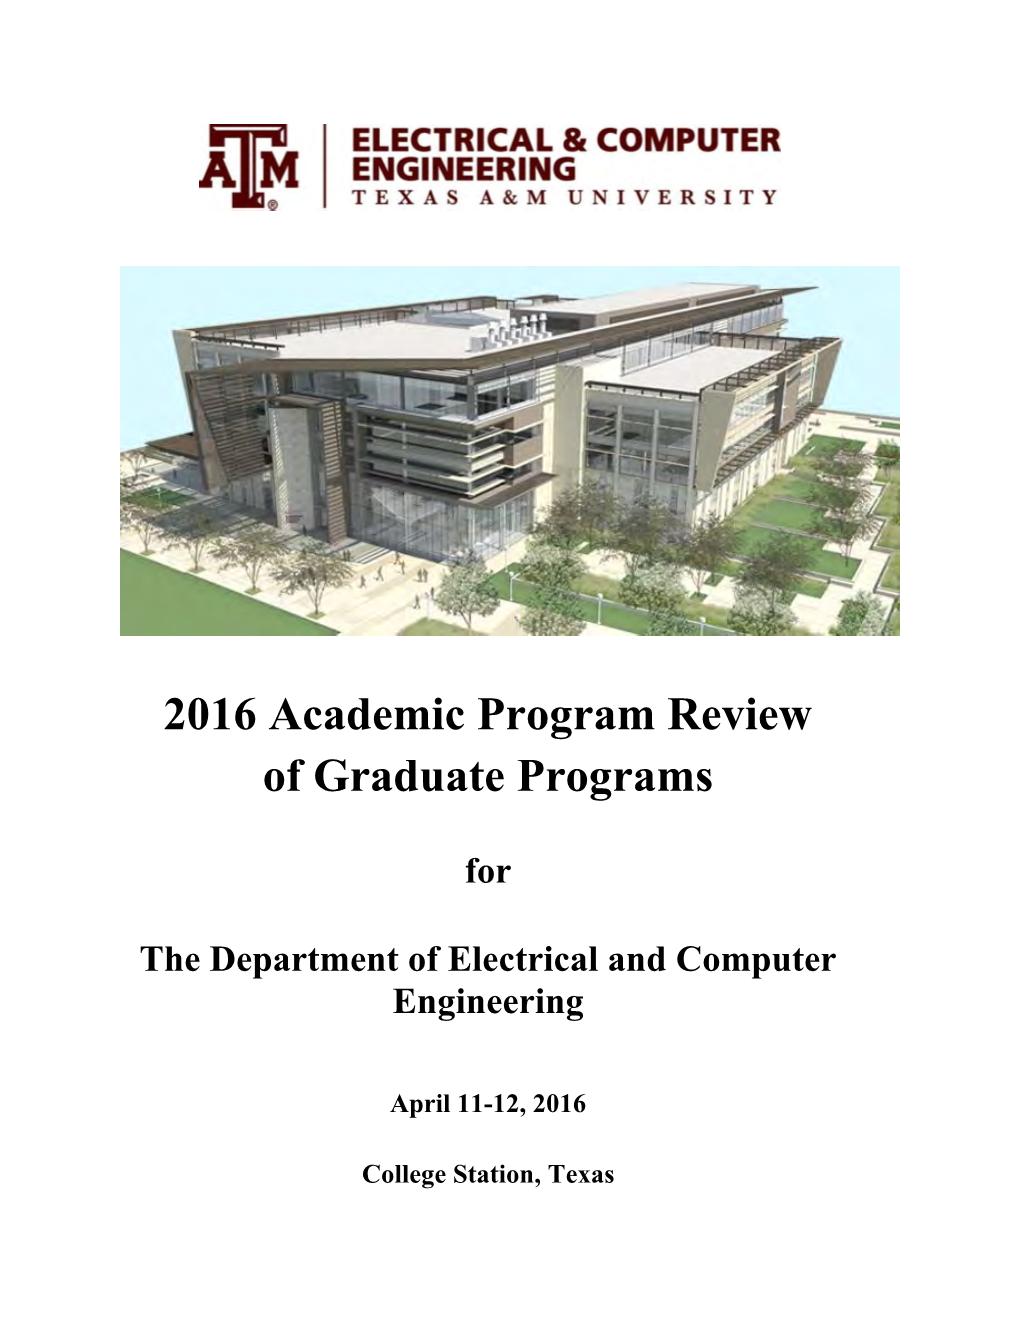 2016 Academic Program Review of Graduate Programs